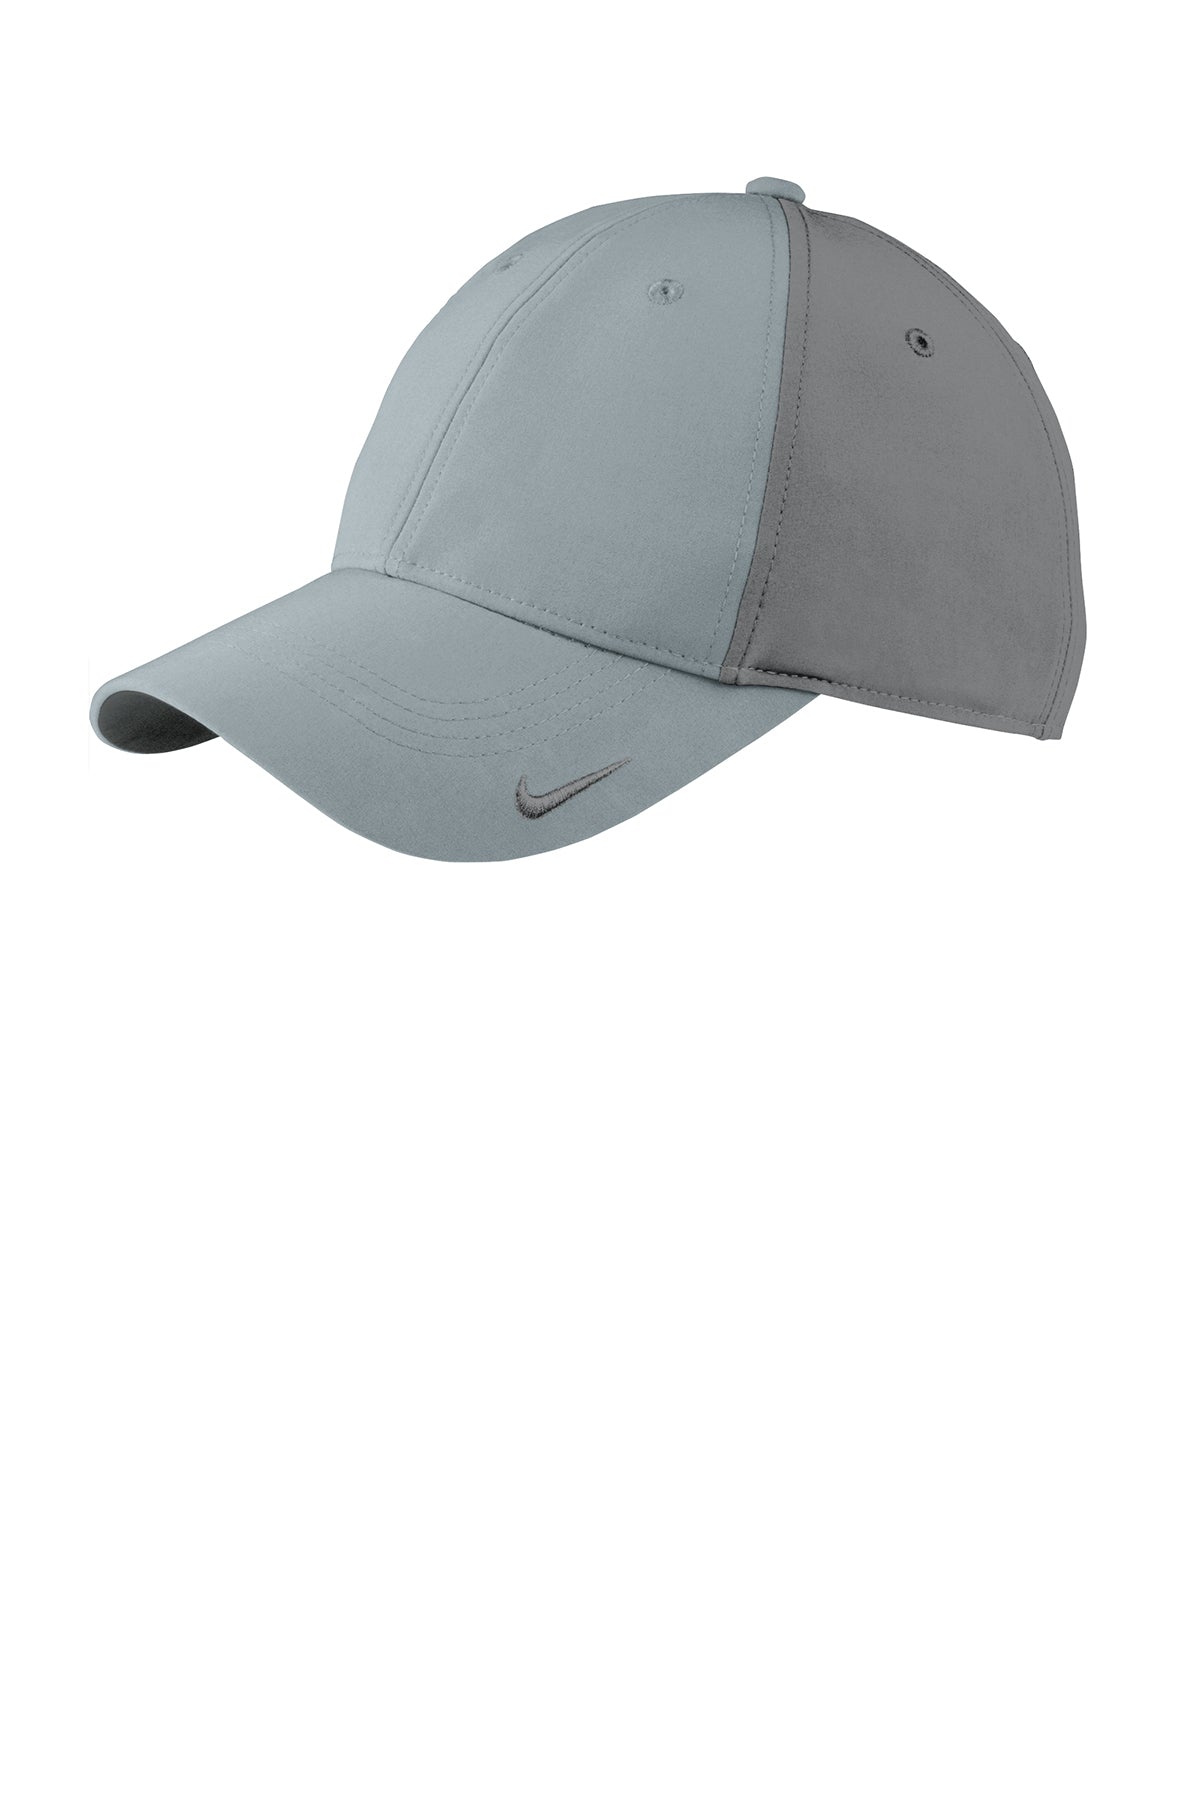 Nike Dri-FIT Legacy Customized Caps, Cool Grey